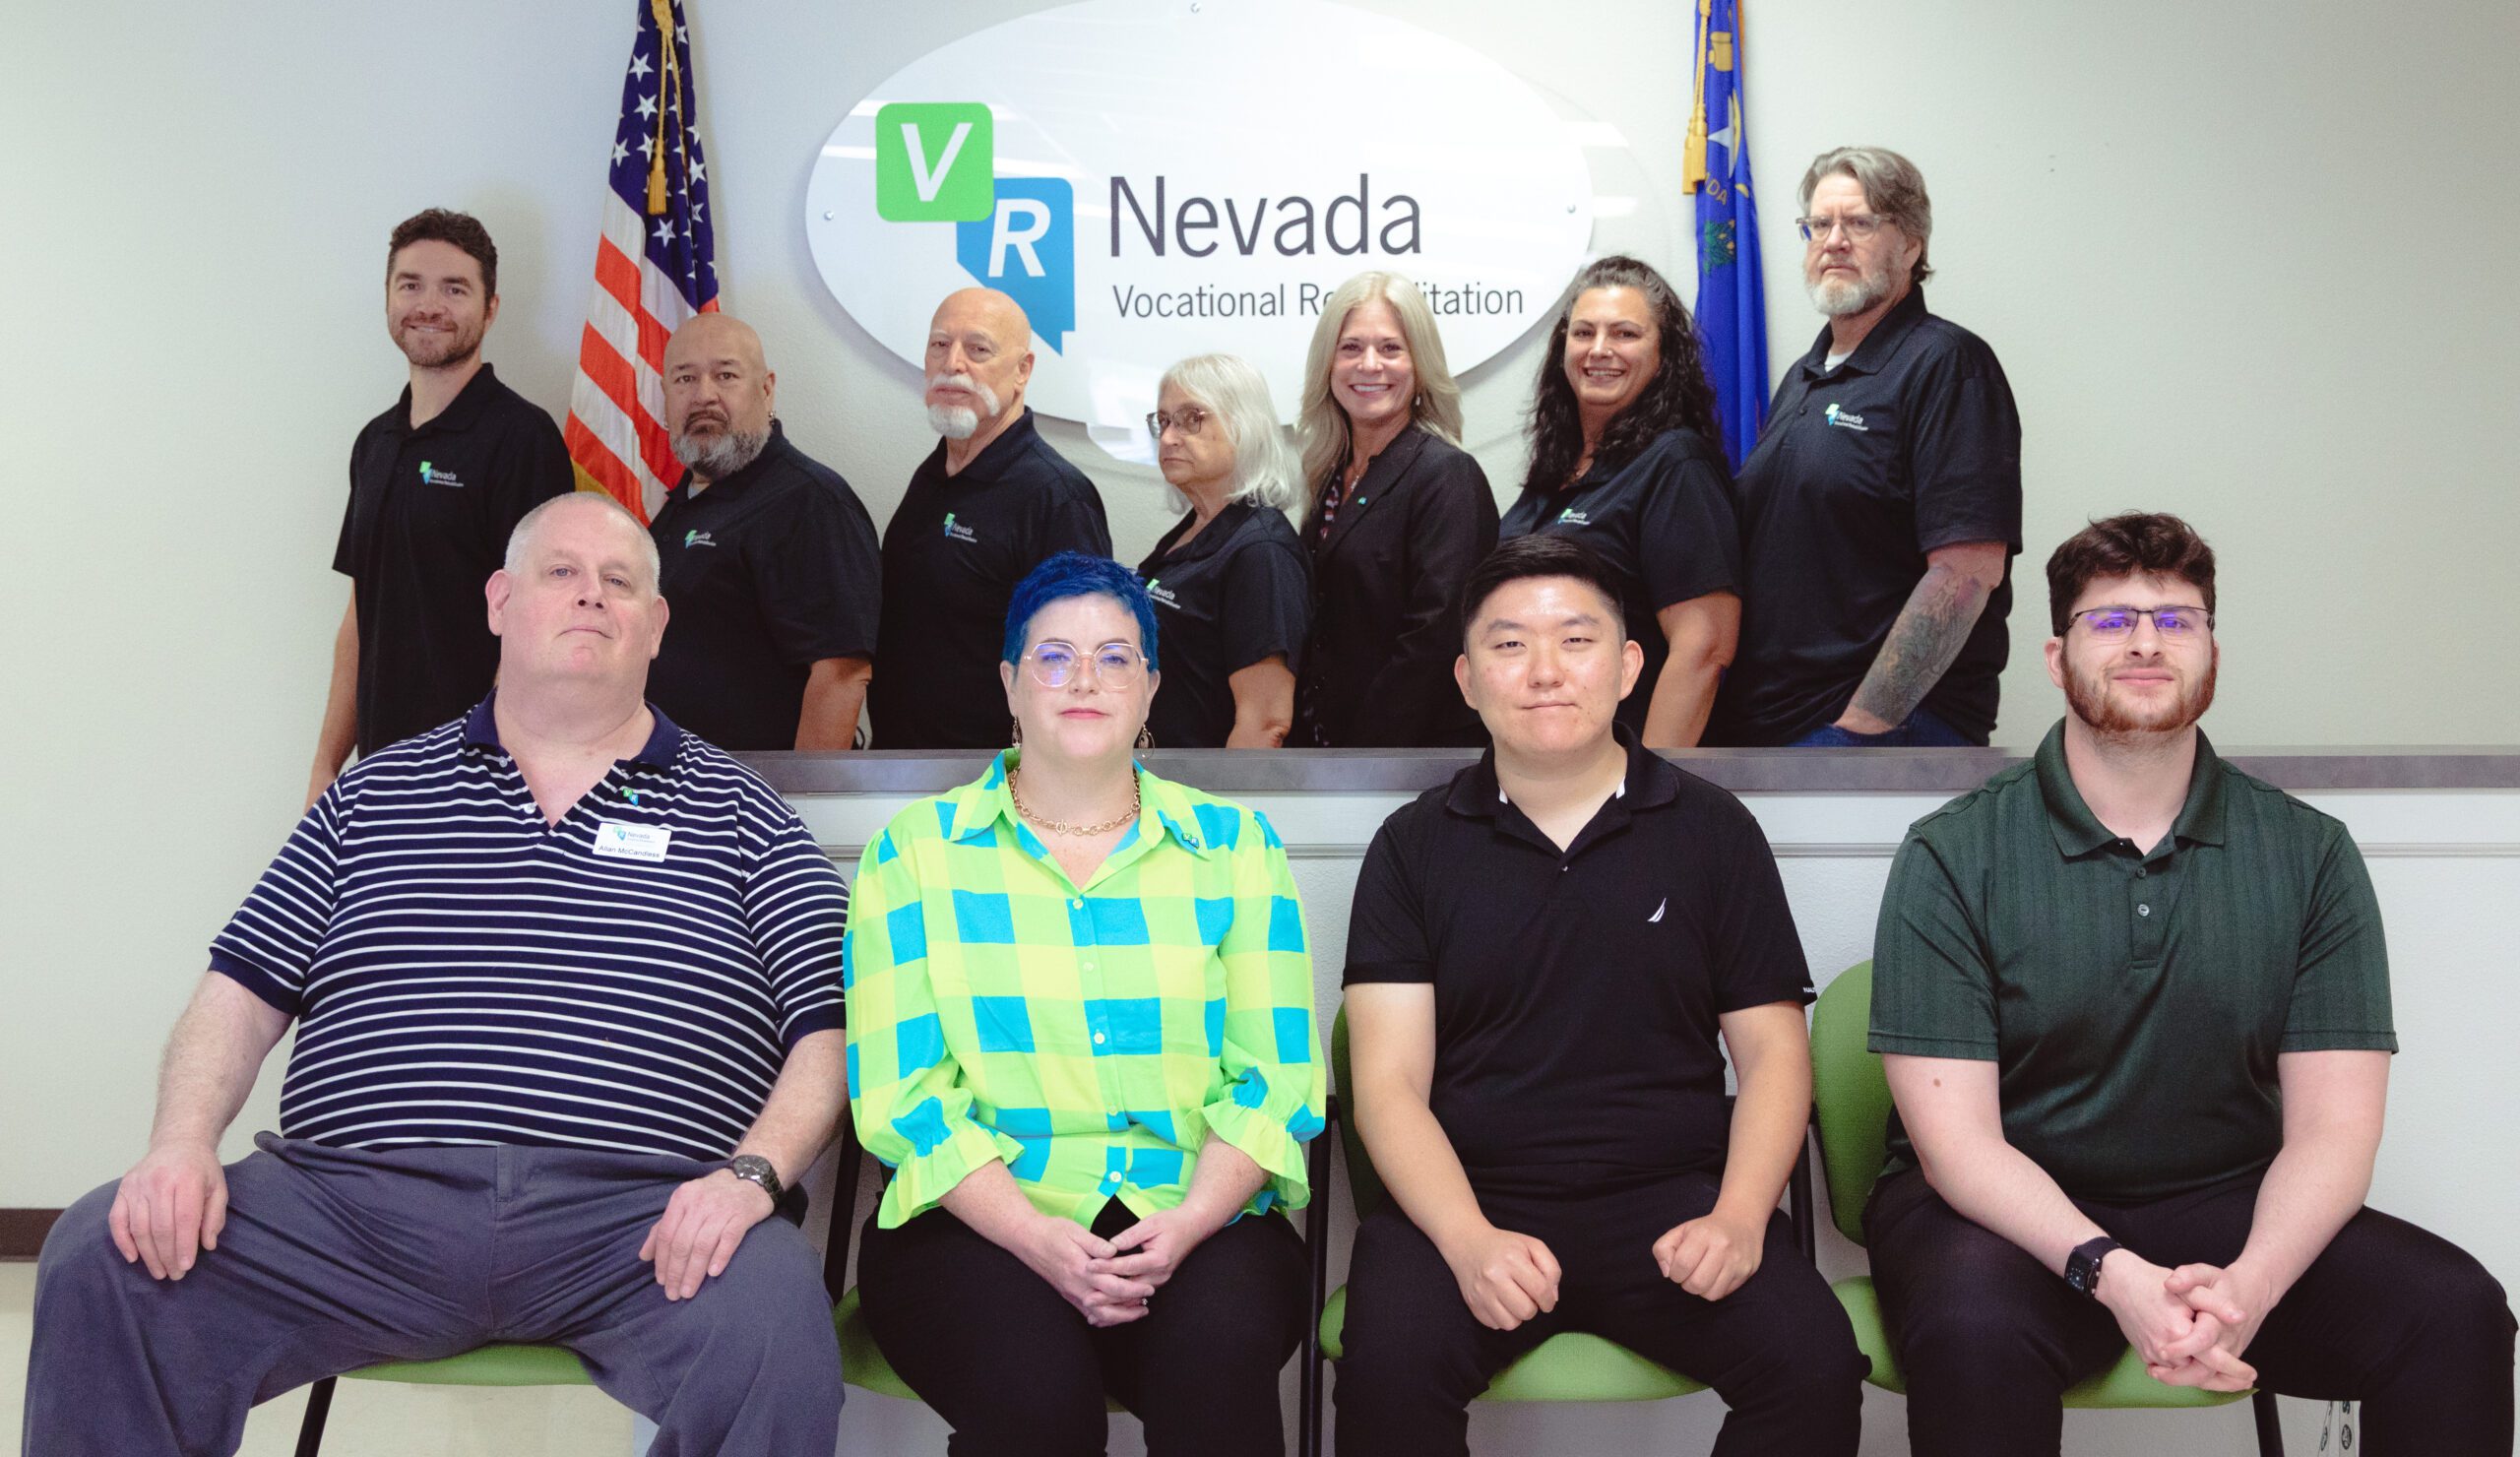 VR Nevada Staff